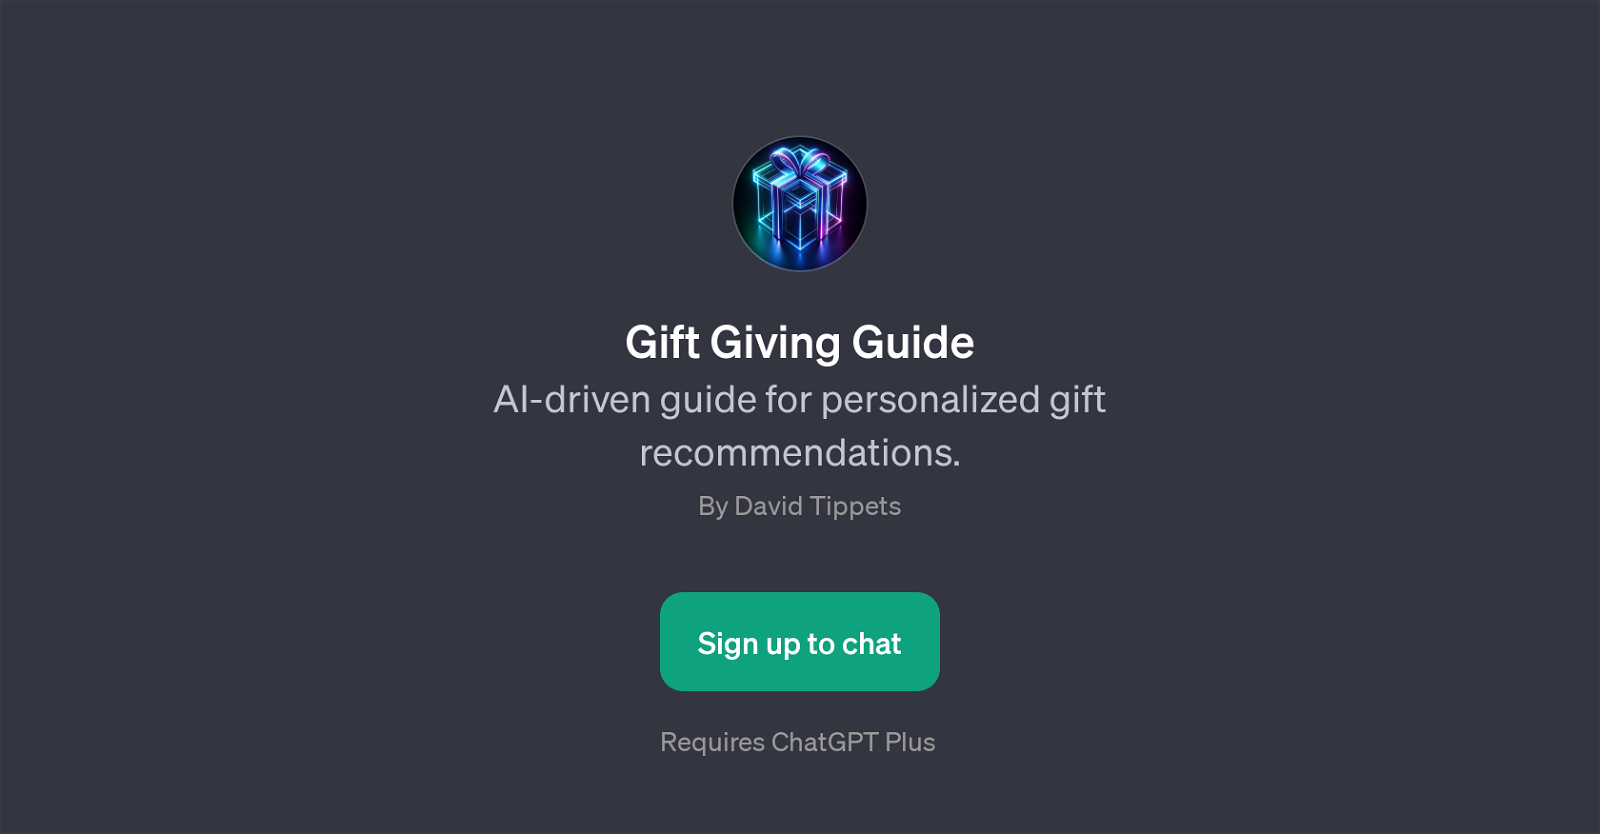 Gift Giving Guide website